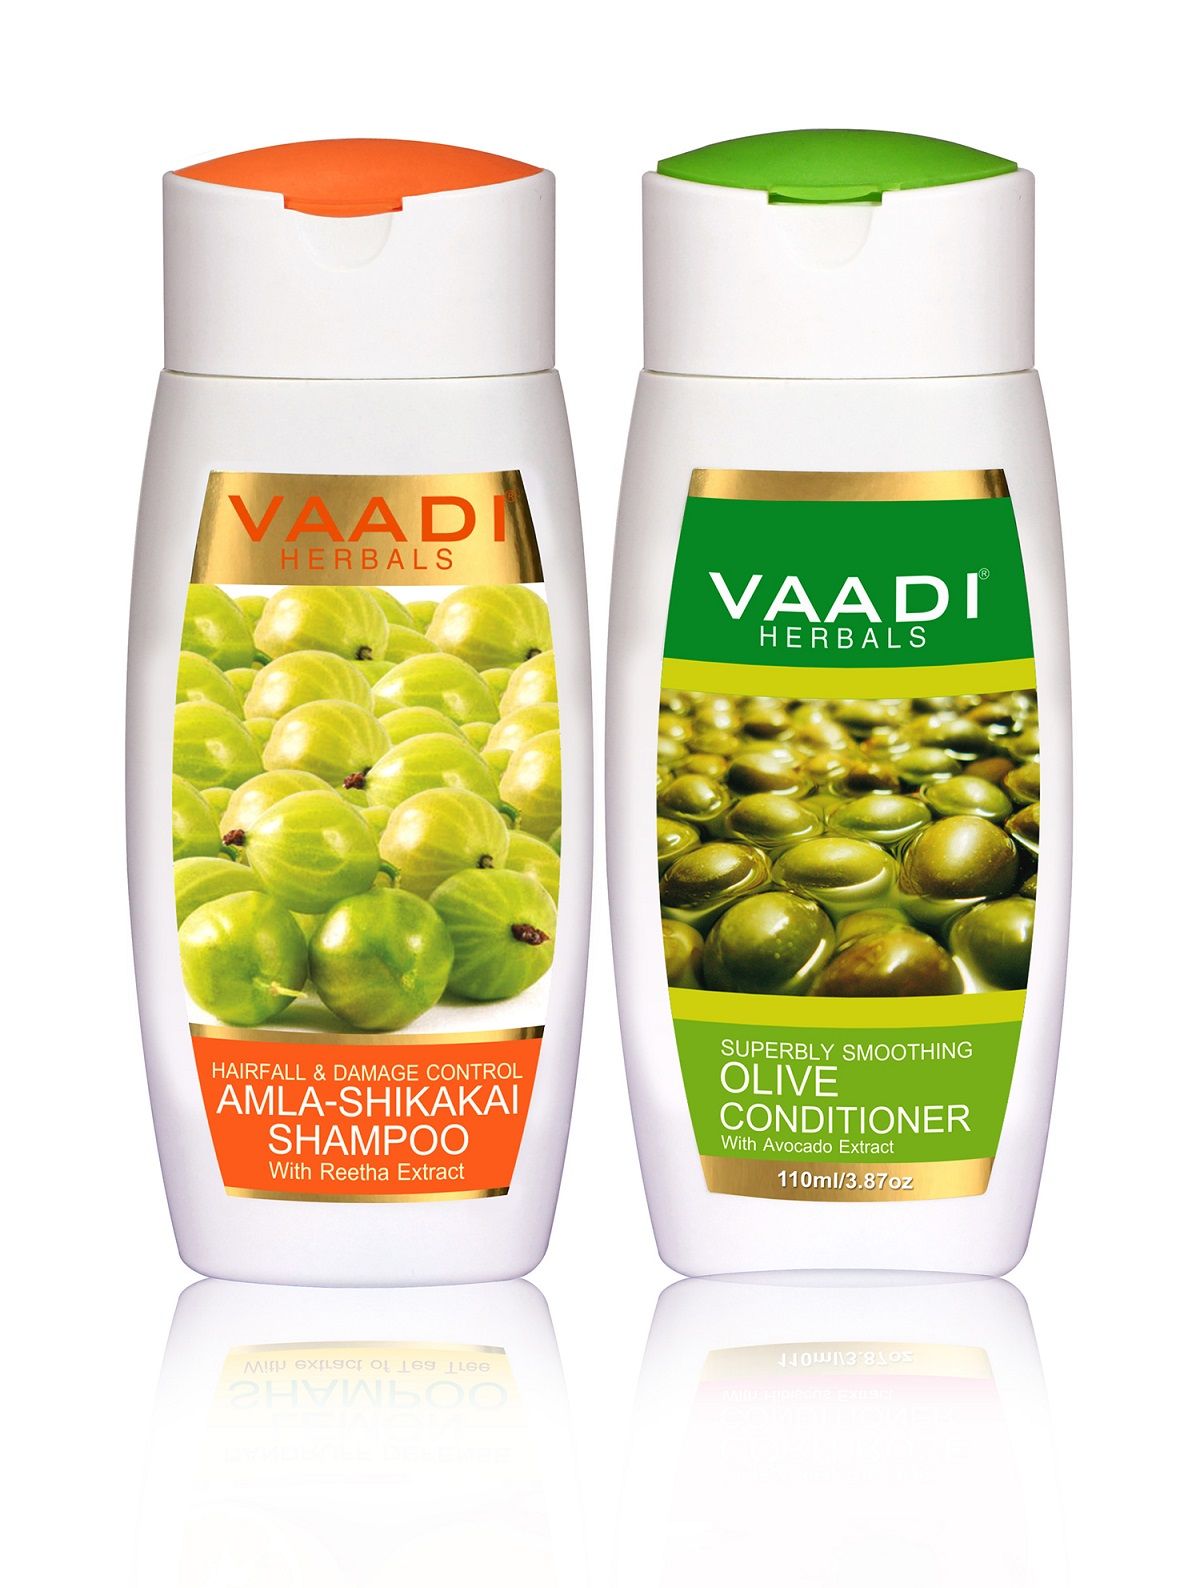 Vaadi Herbals Amla Shikakai Shampoo - Hairfall & Damage Control With Olive Conditioner